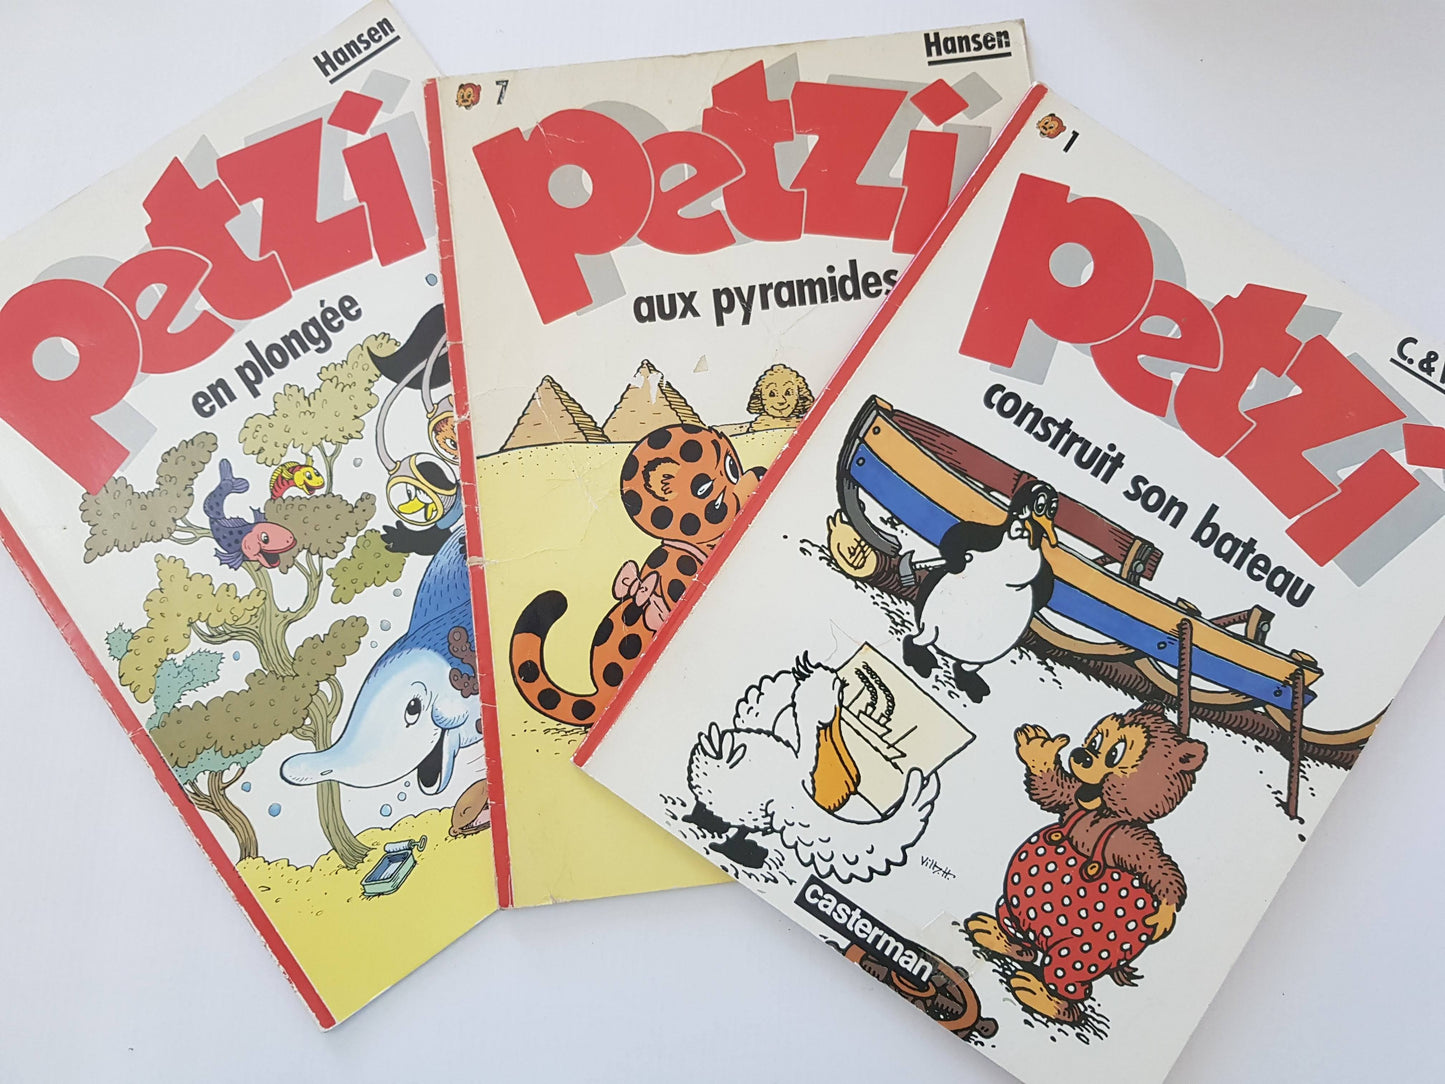 3 Livres: Petzi en plongée, Petzi aux pyramides, Petzi construit son bateau Well Read Petzi  (4597649178679)